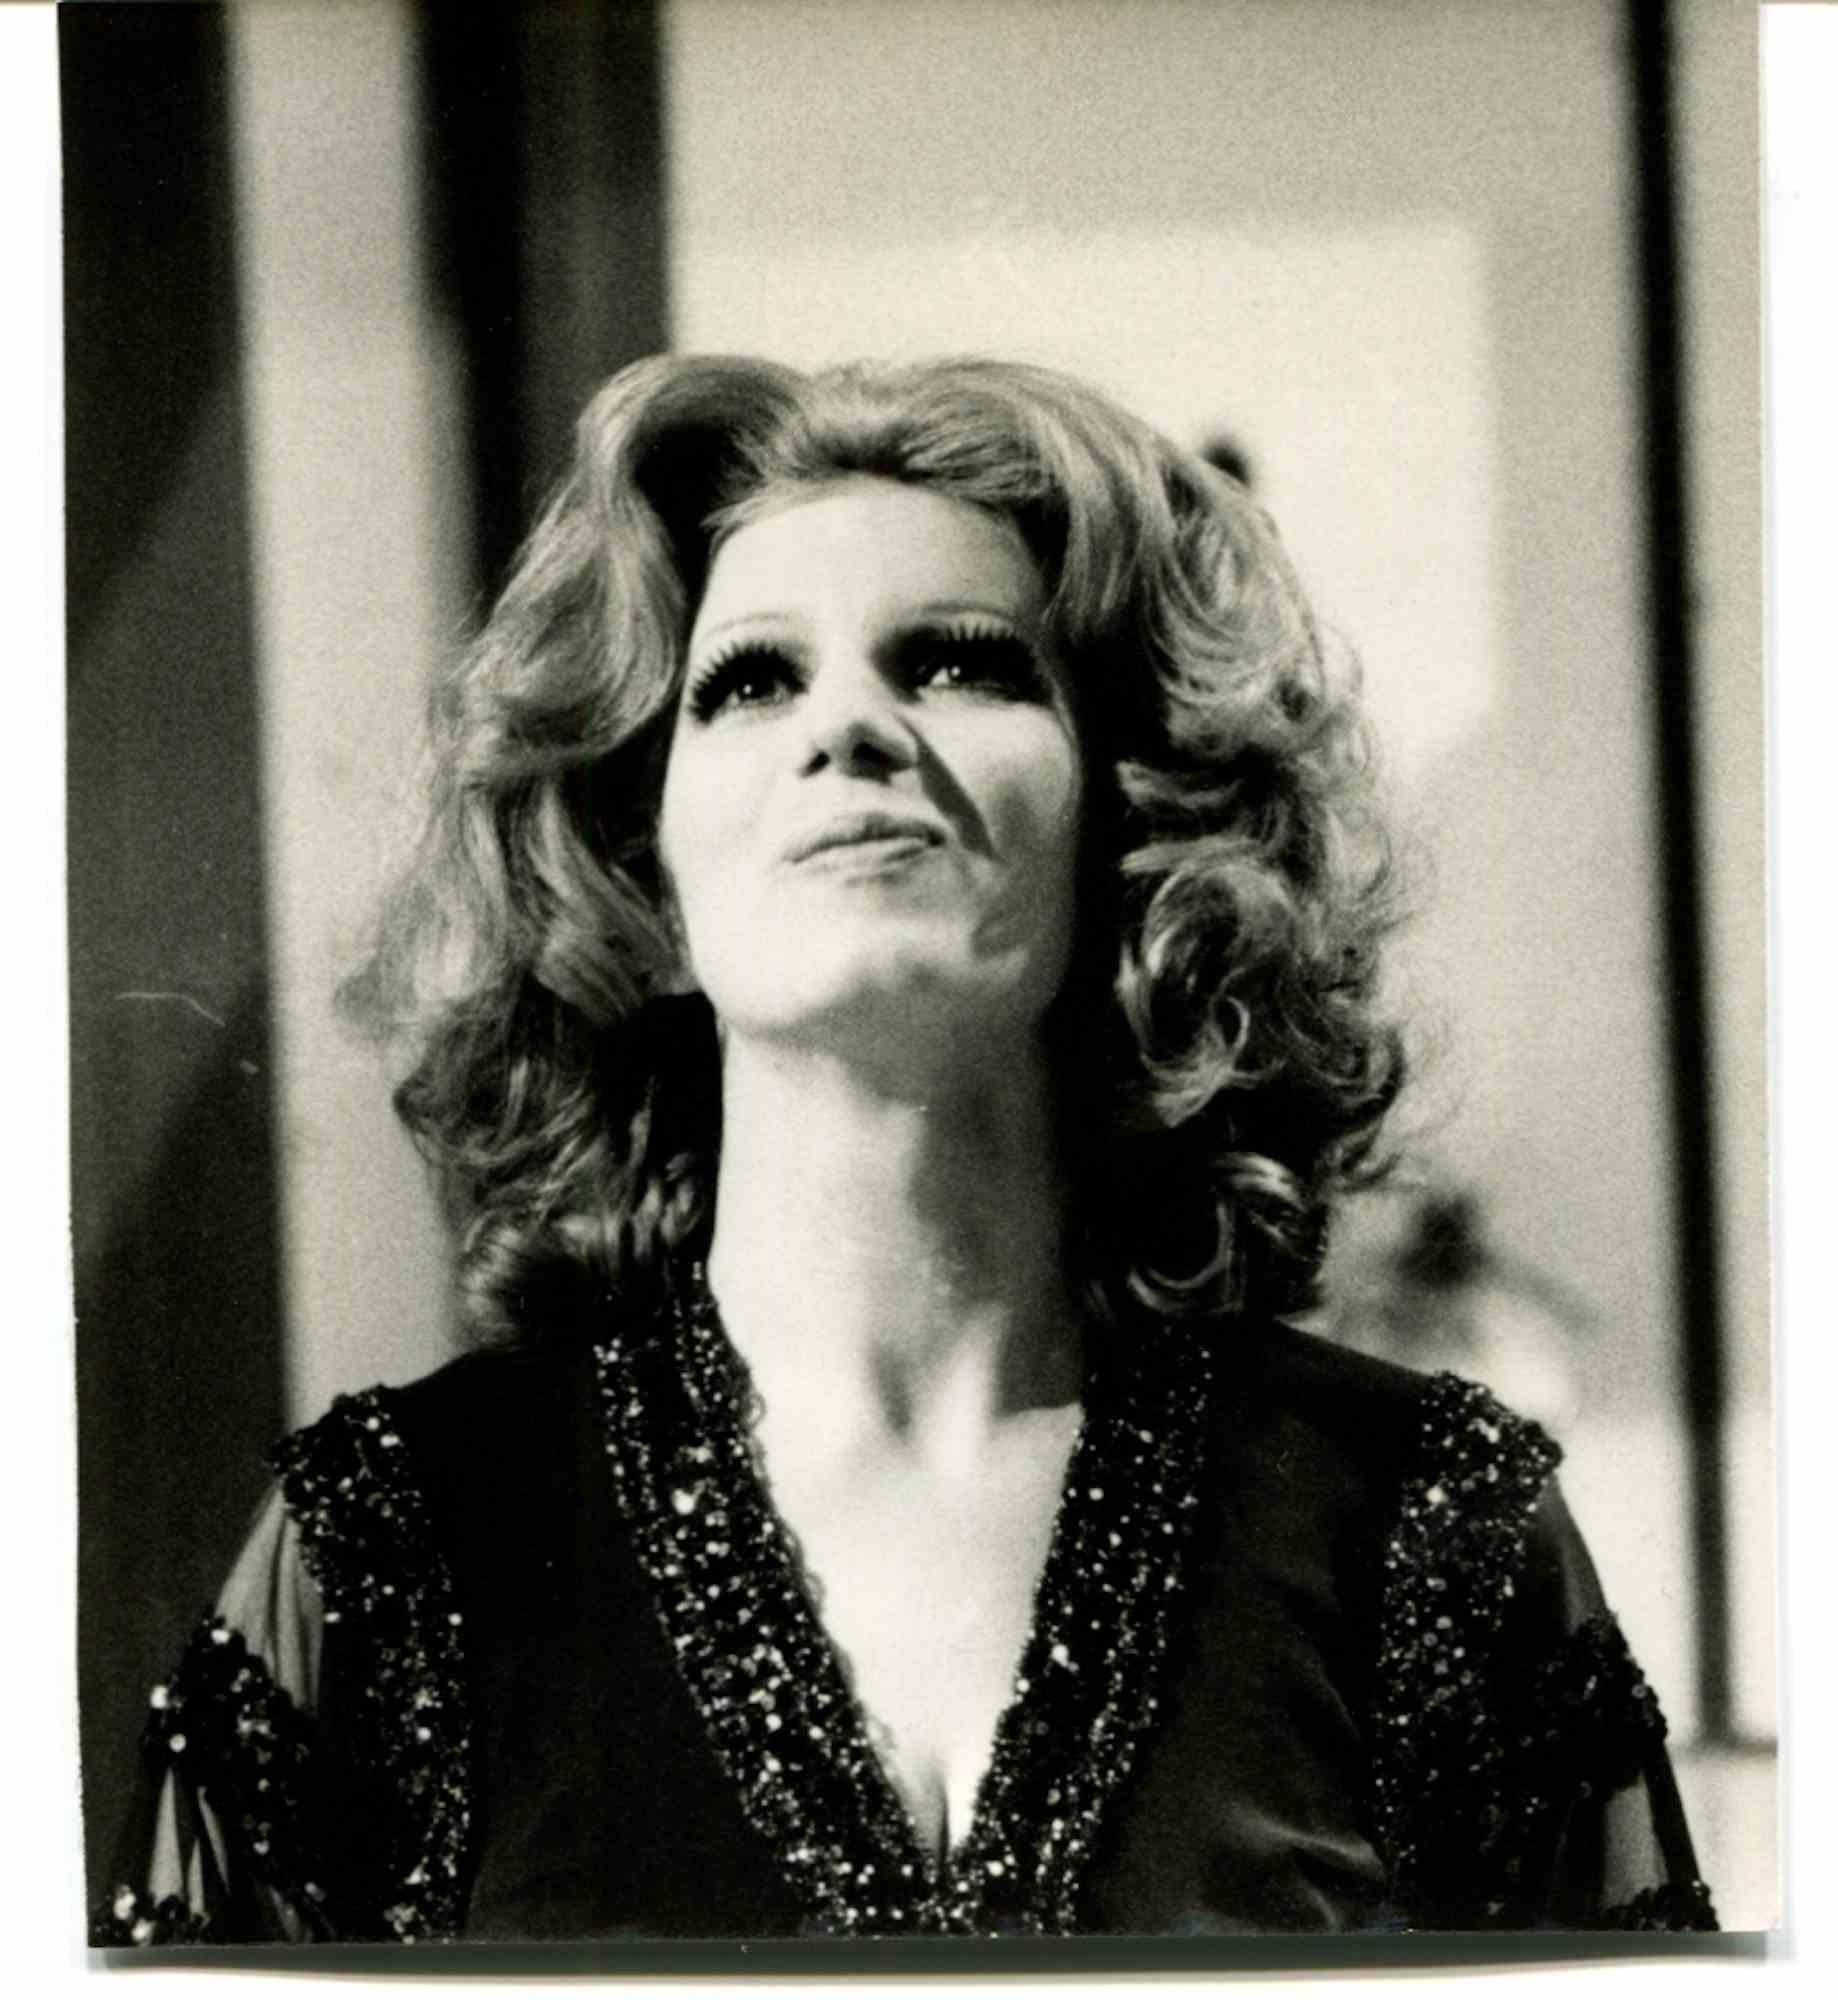 Unknown Portrait Photograph - Photo of Iva Zanicchi -  Photo - 1970s